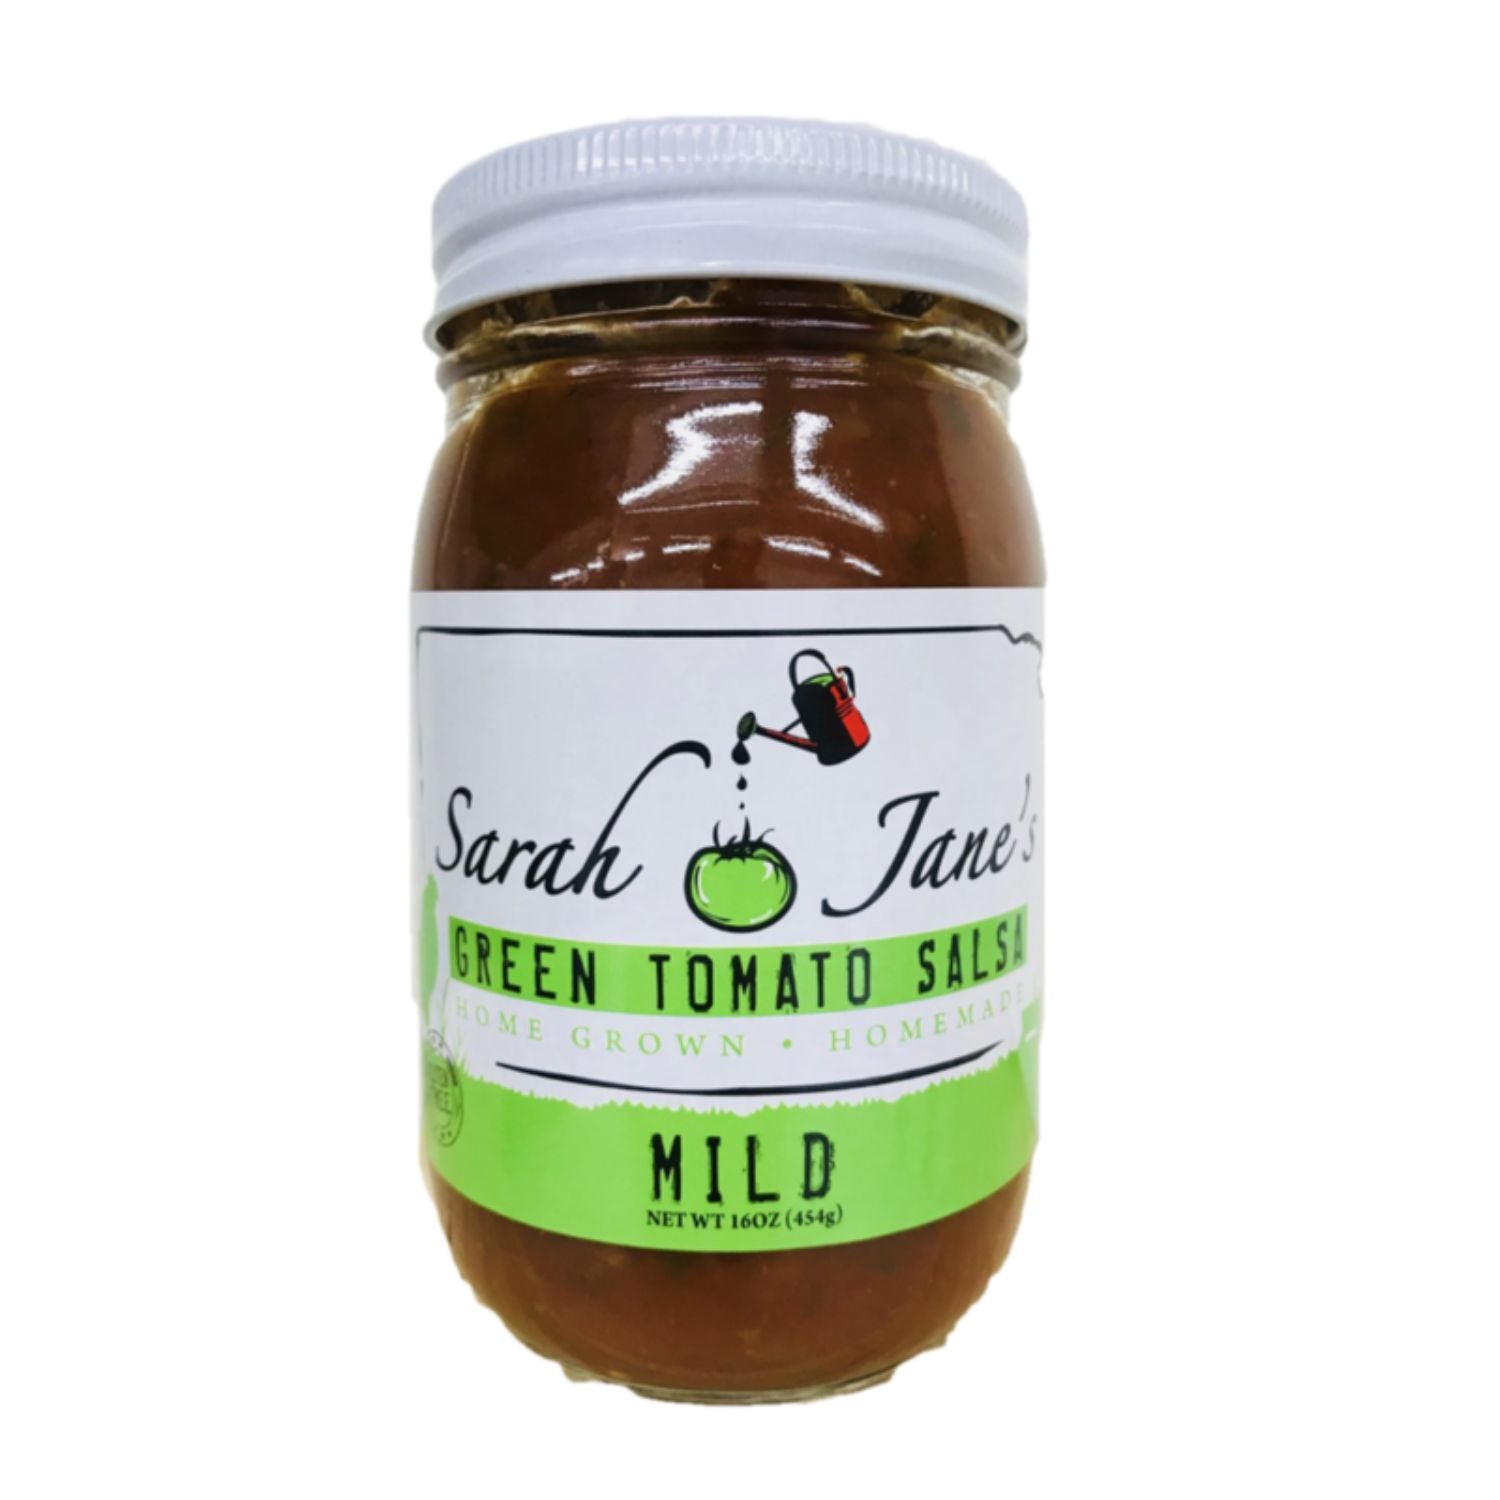 Sarah Jane Mild Green Tomato Salsa 12043745